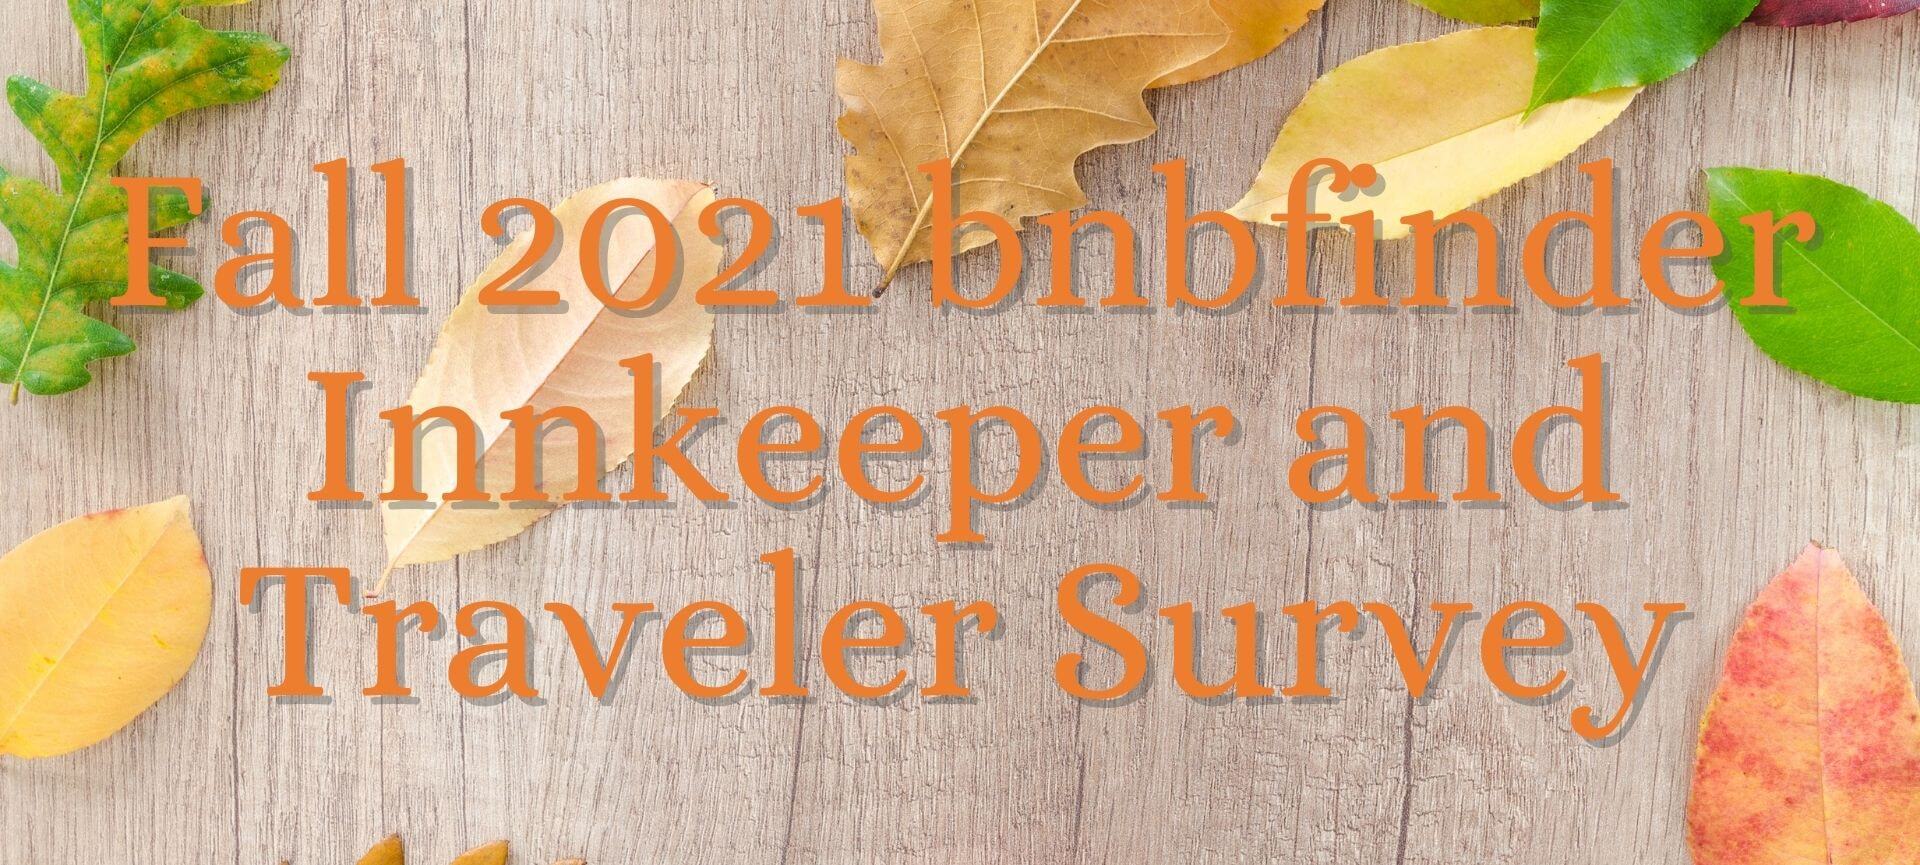 Fall Traveler and innkeeper survey on autumn leaf backgound